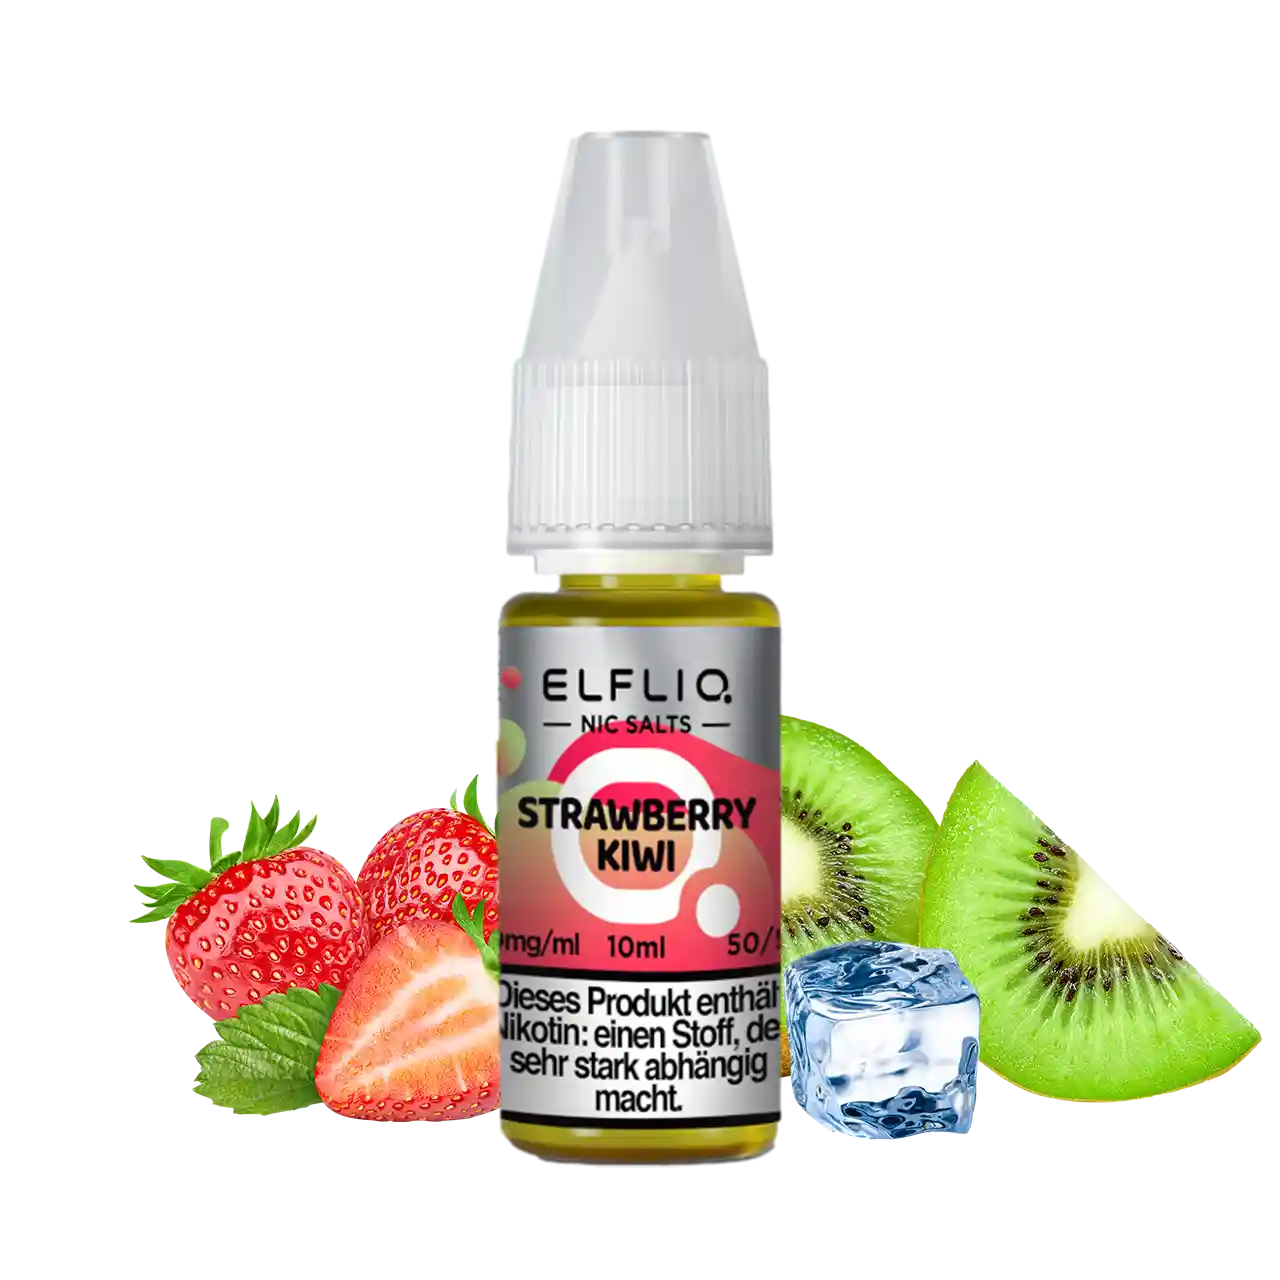 Elfliq Strawberry Kiwi Nic Salt Liquid